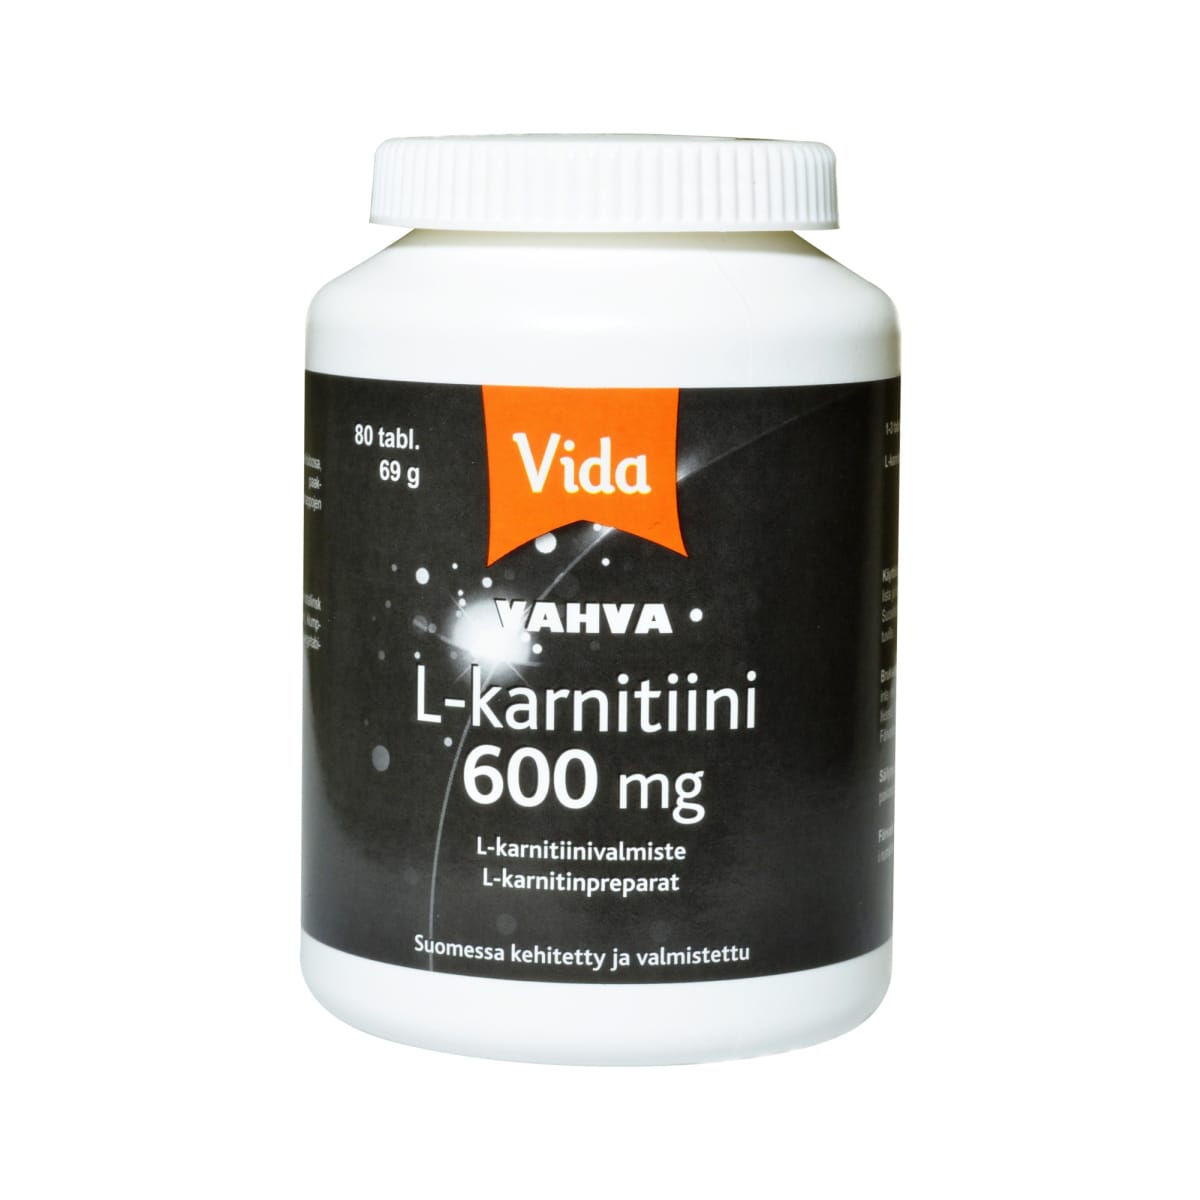 Vida L-Karnitiini 600 mg 80 tabl. ravintolisä  verkkokauppa